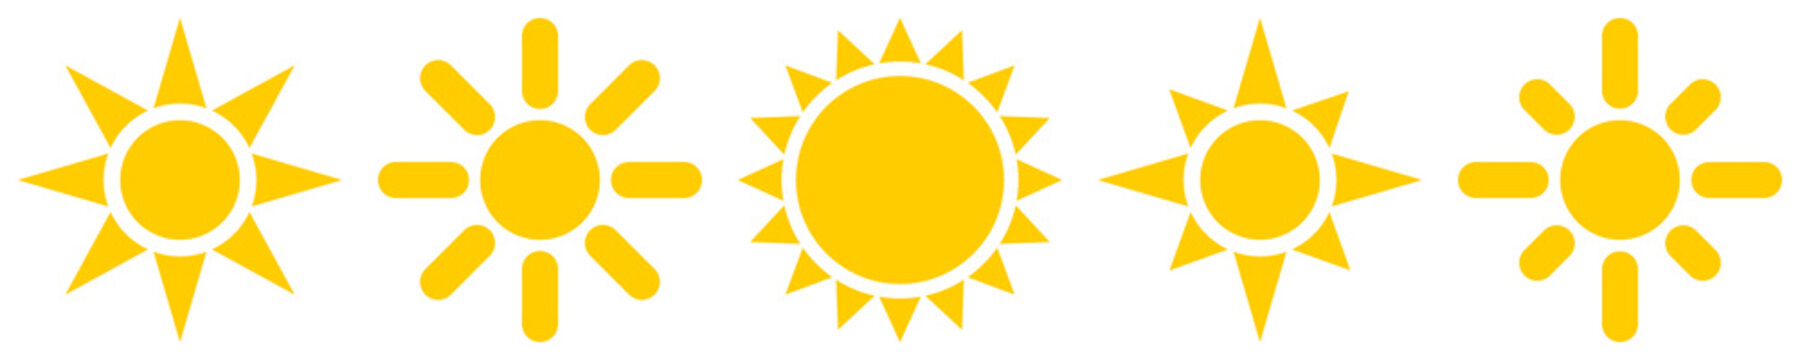 Sun vector icons. Sun icon collection. Vector illustration